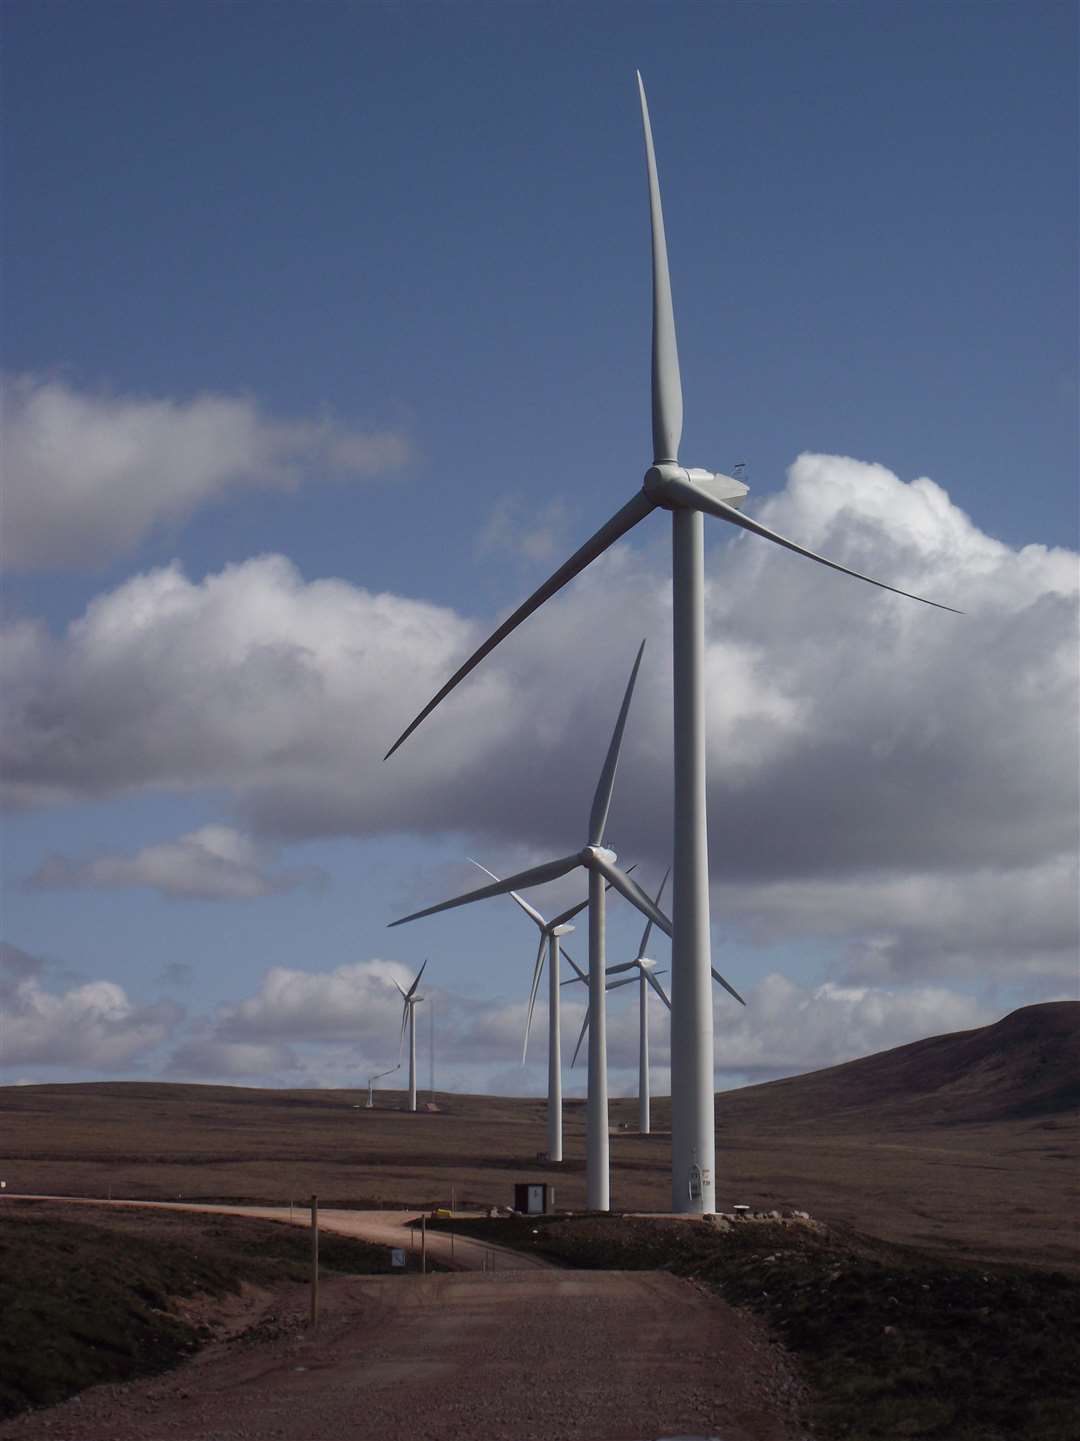 The existing Gordonbush wind farm has been generating power since 2012.